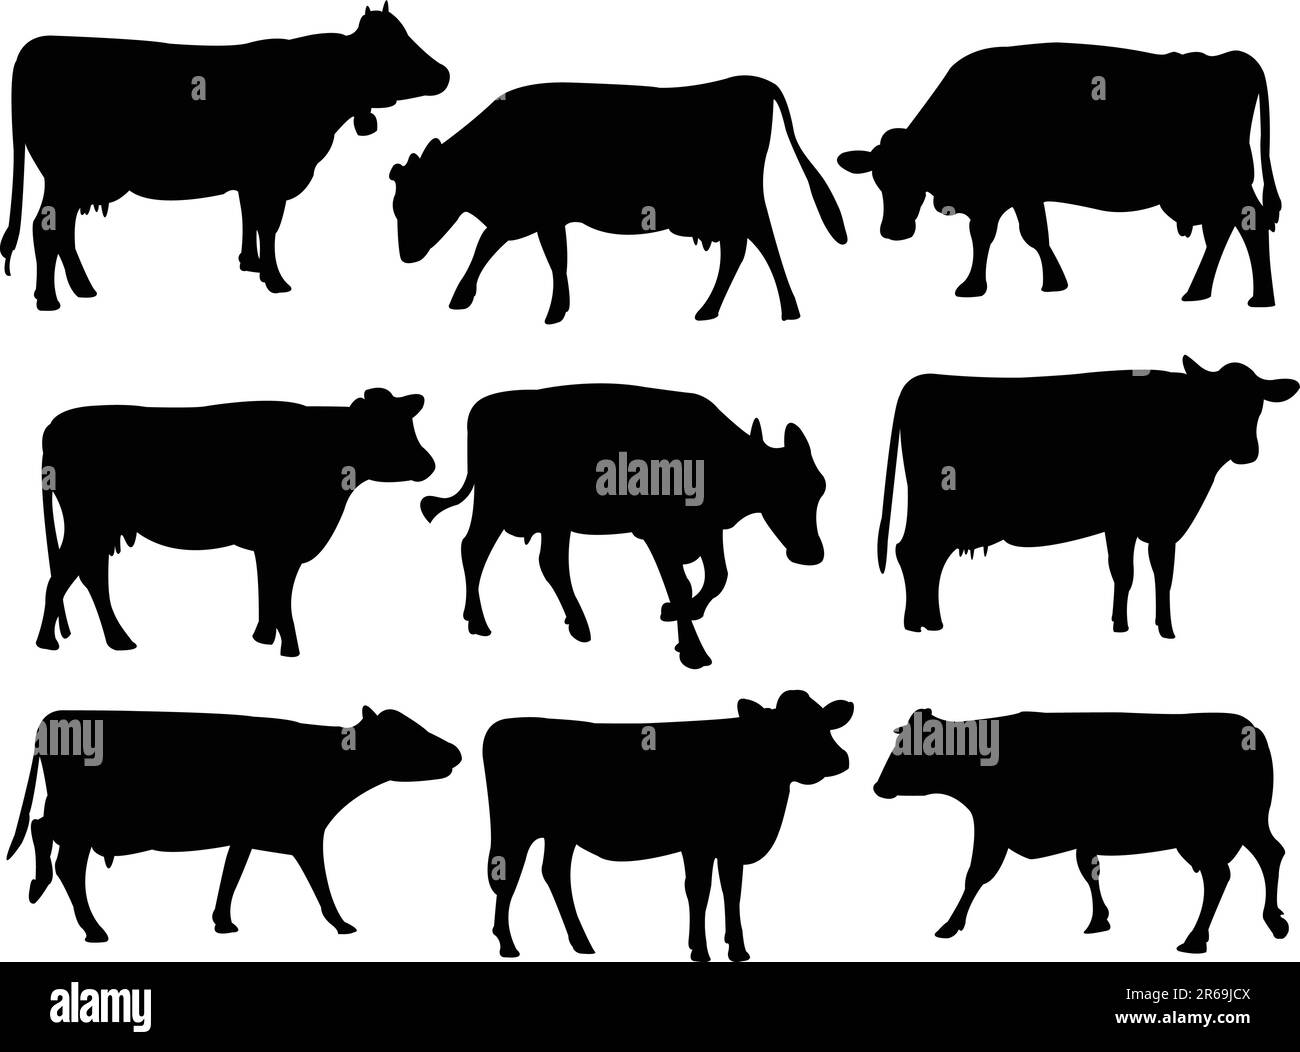 cow silhouette collection - vector Stock Vector